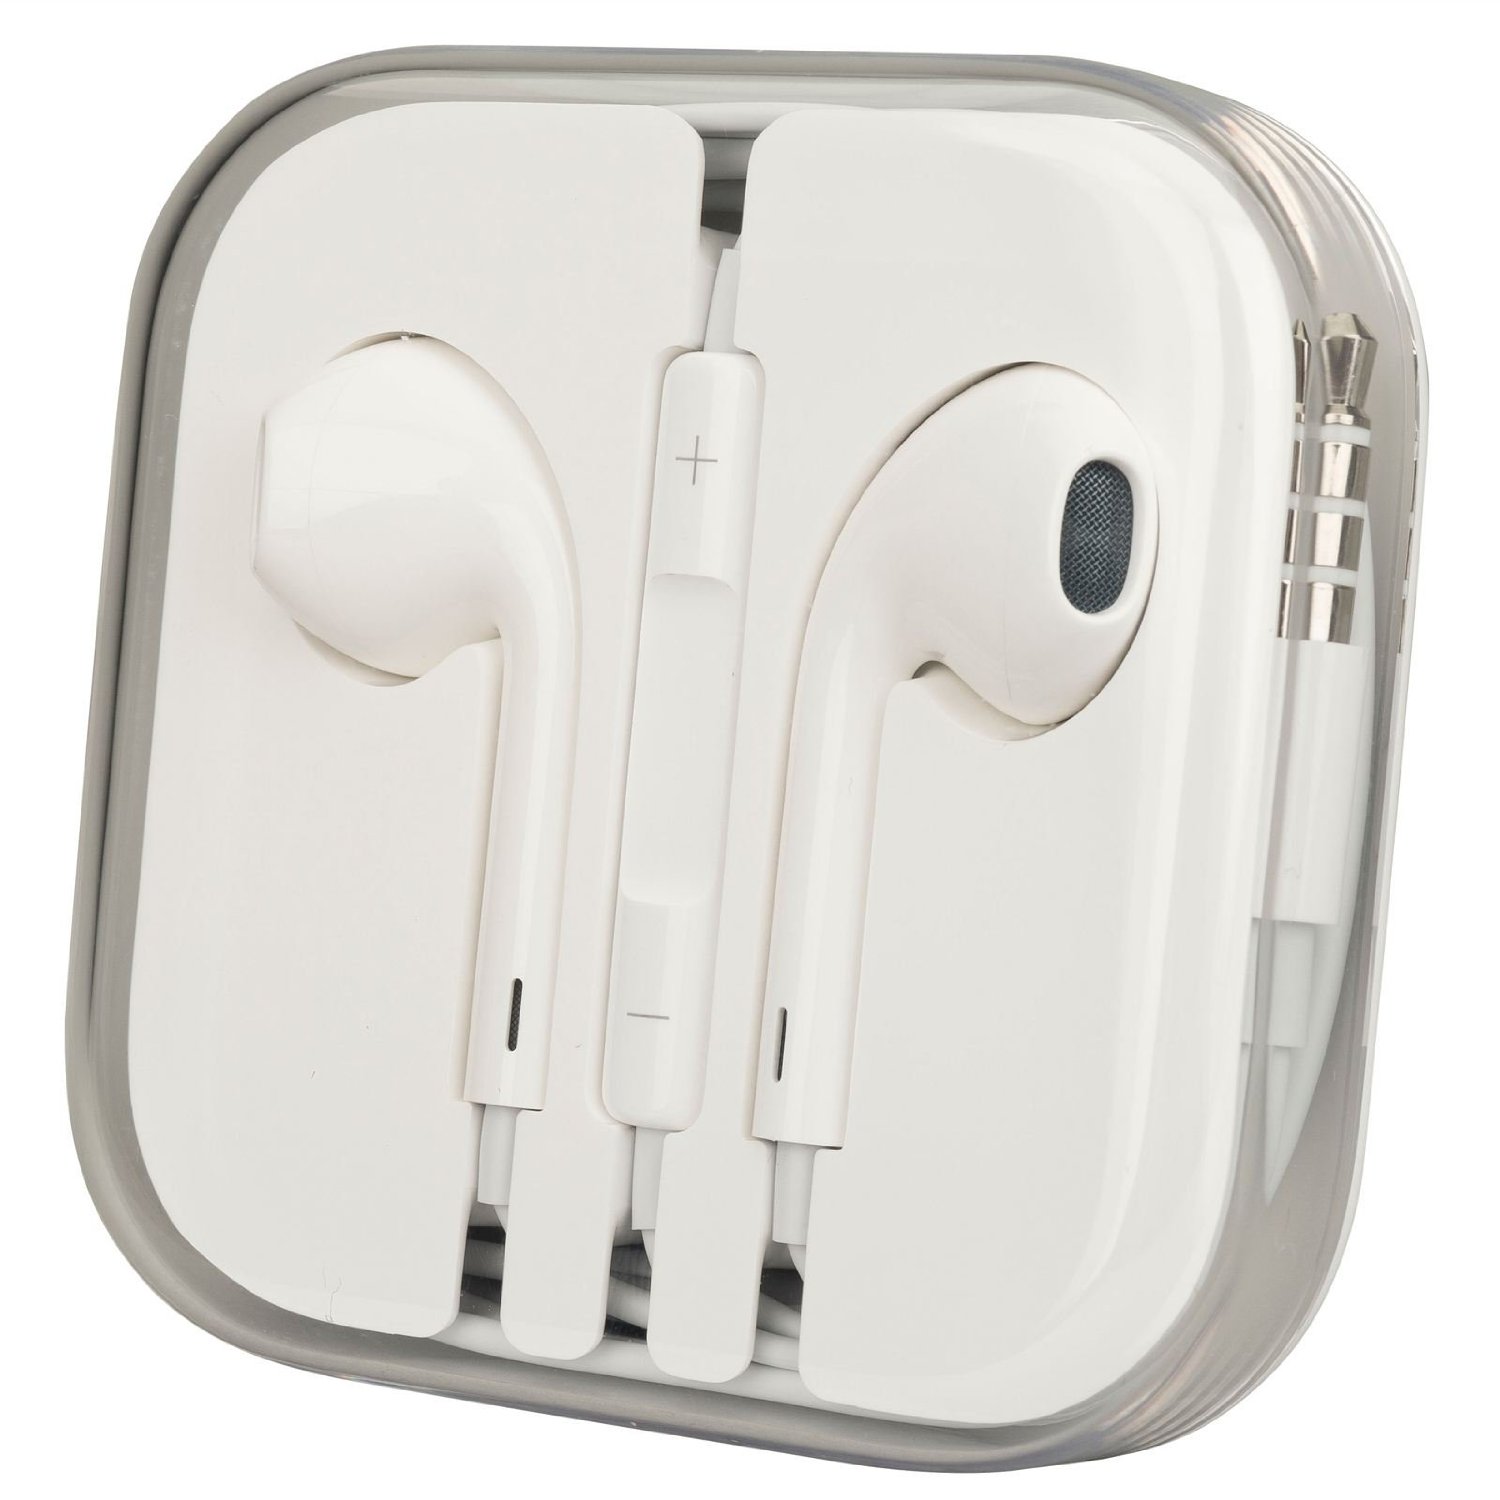 Universal Ear-pod for iPhone 6, iPhone 5, iPhone 4, iPad 2,3,4. iPad ...